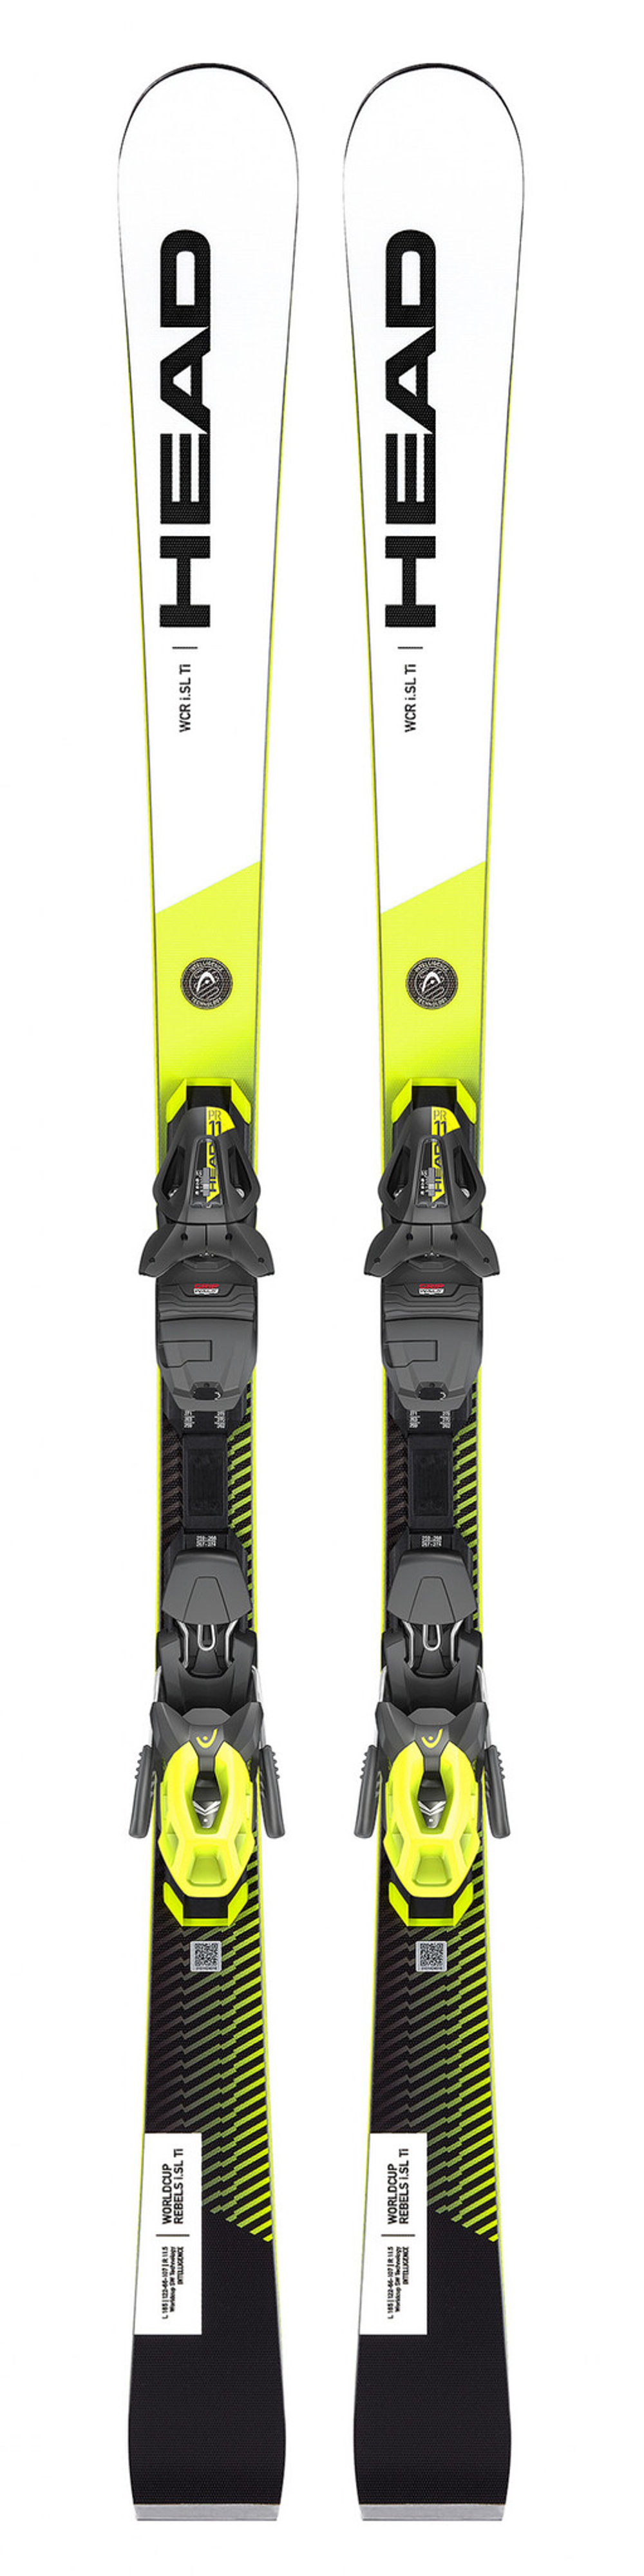 HEAD экспертные лыжи  313380 WC Rebels iGSR SW LYT-PR с креплениями PR 11 GW BRAKE  white/neon yellow